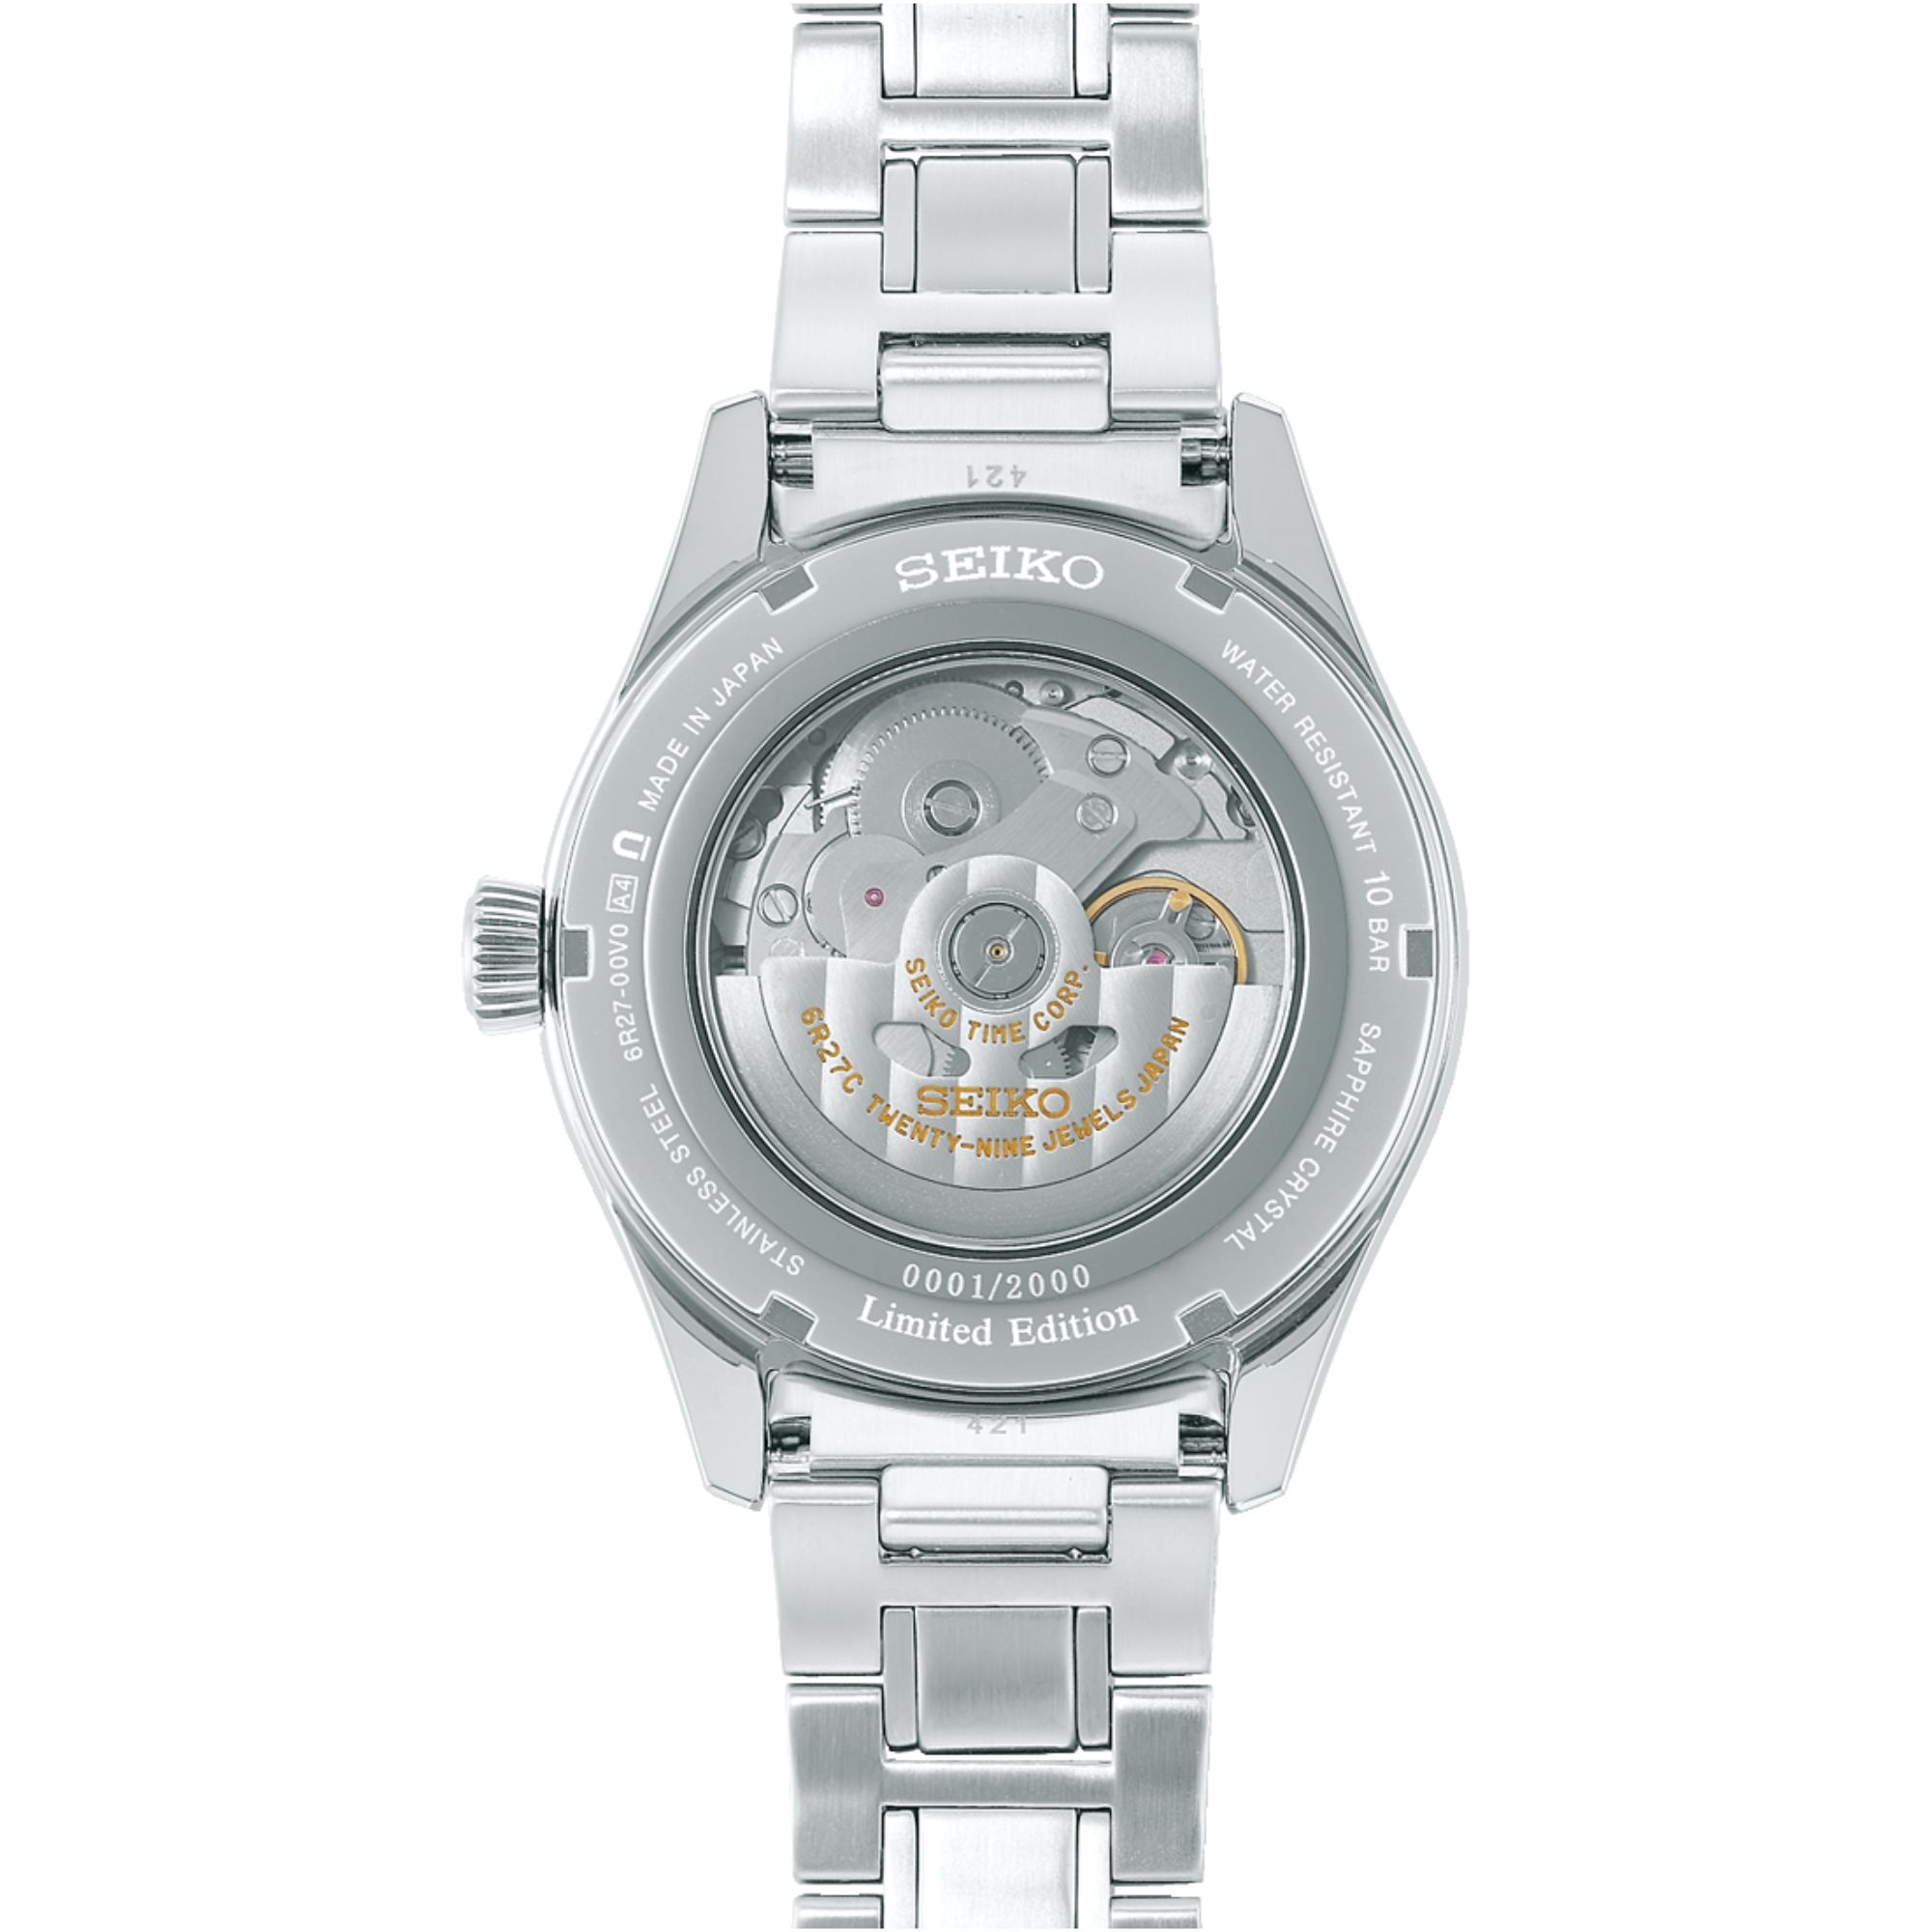 Relógio Seiko Presage Arita Porcelain Limited Edition Automático Azul SPB267J1